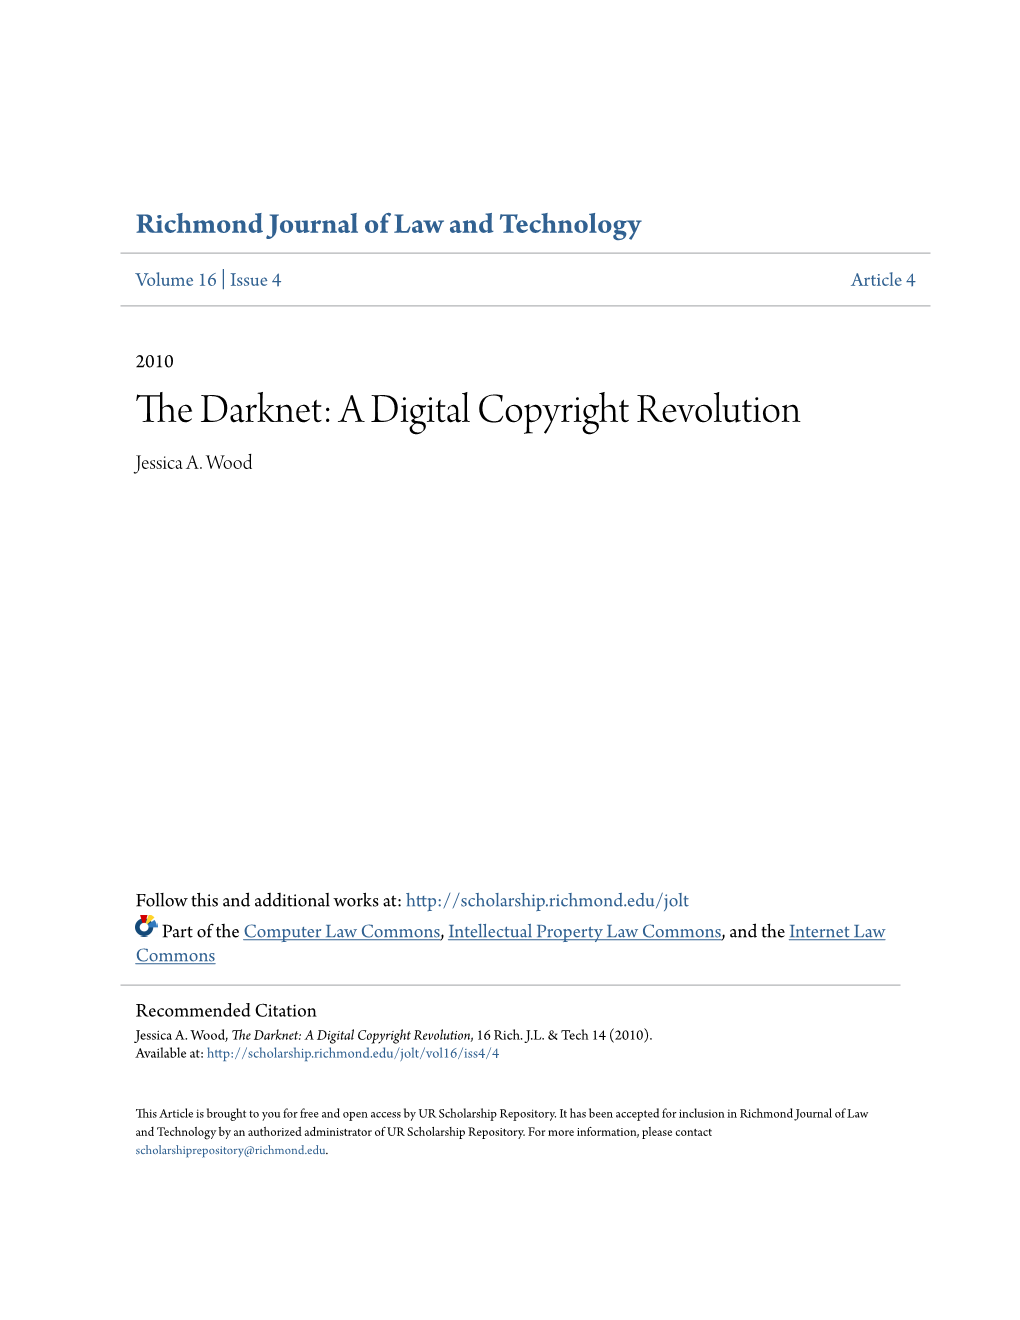 The Darknet: a Digital Copyright Revolution, 16 Rich